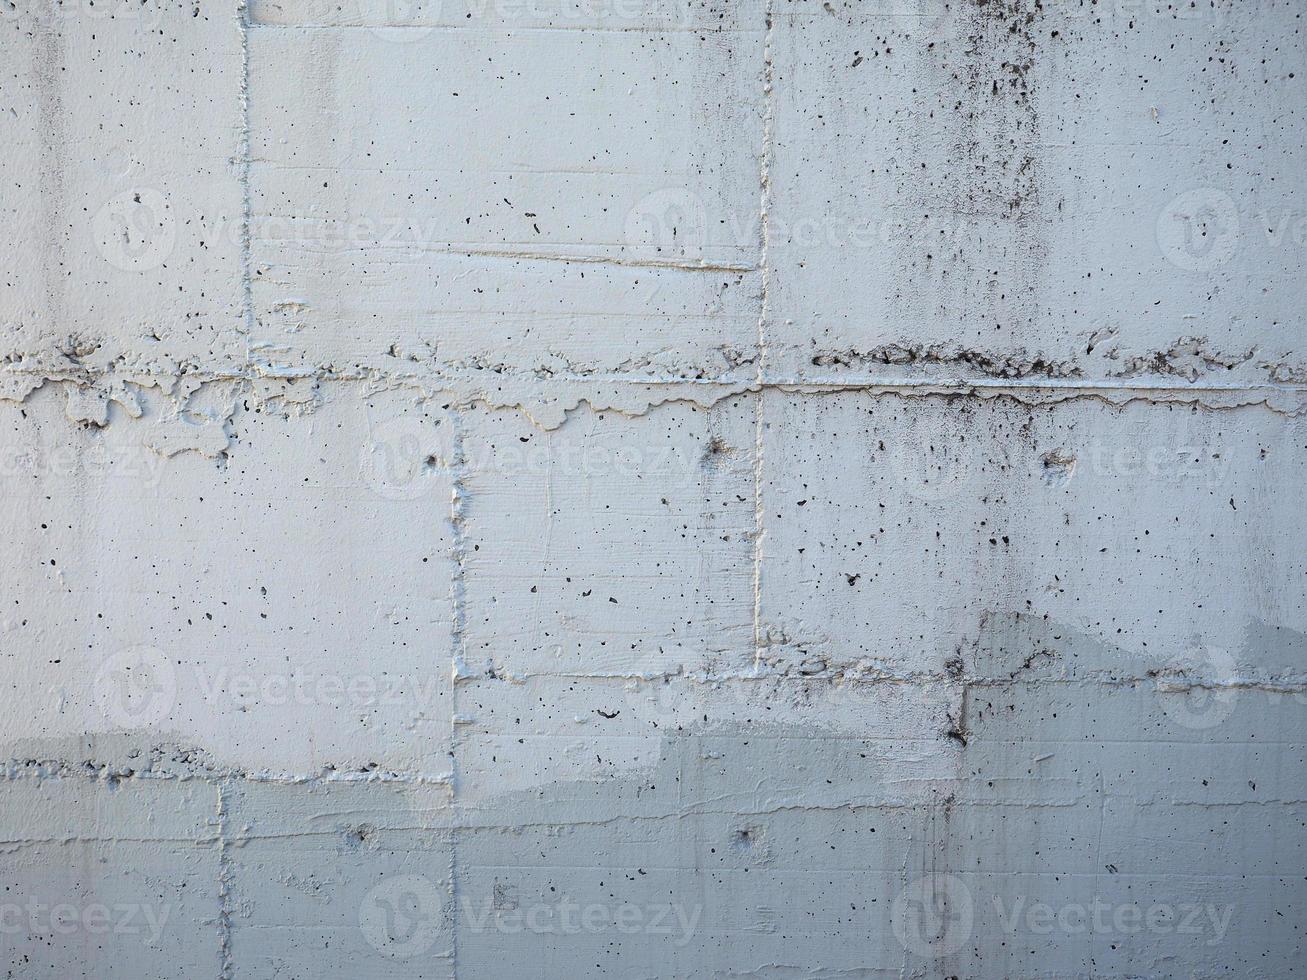 grijze betonnen textuur achtergrond foto